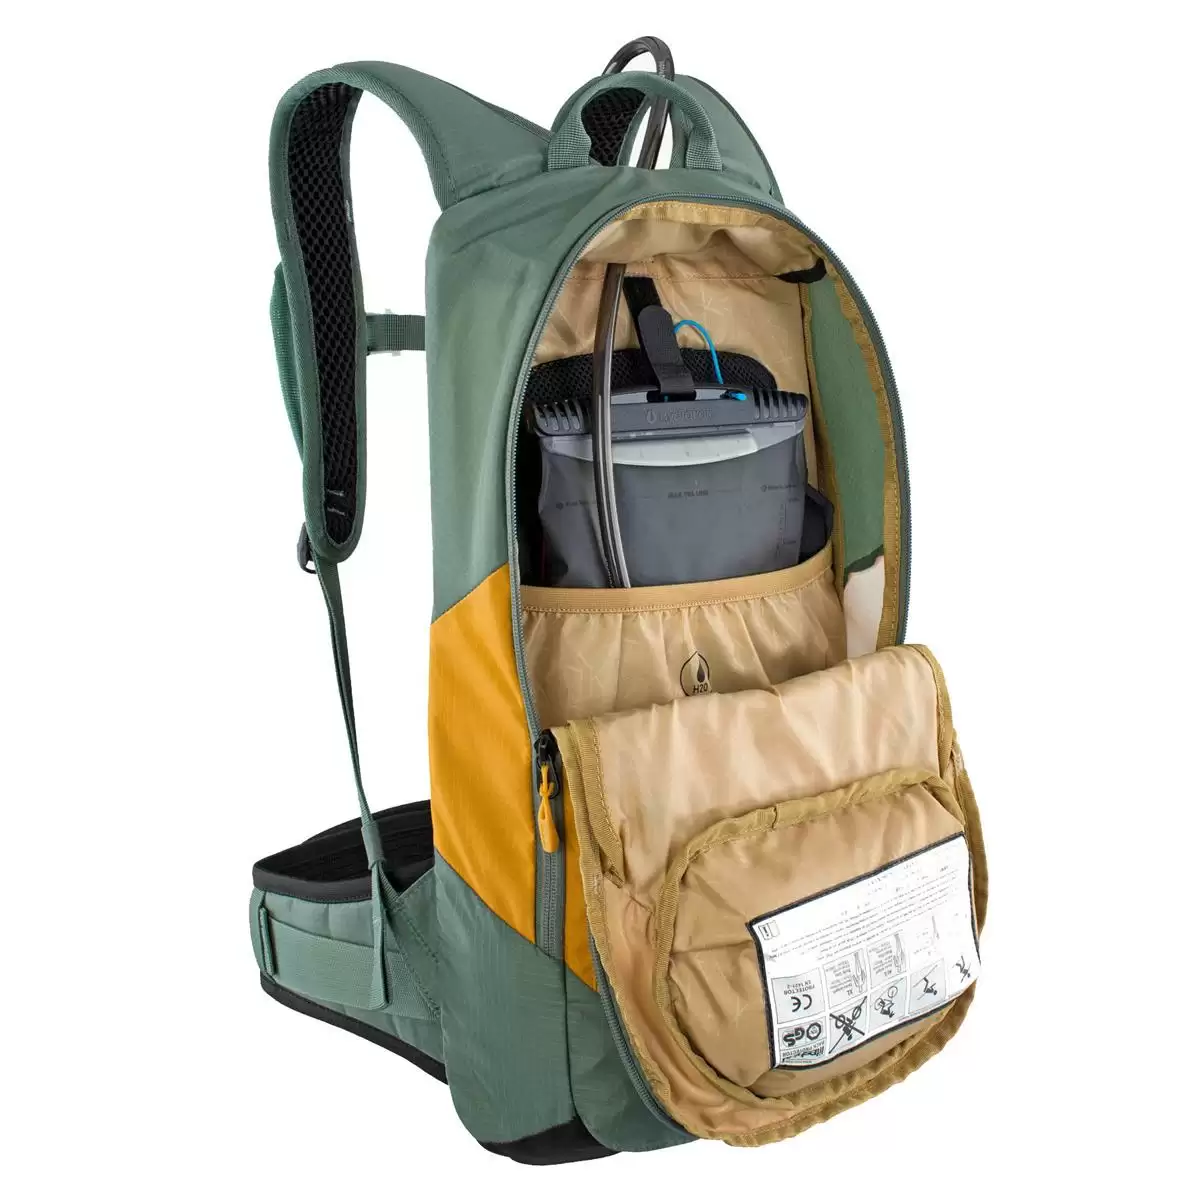 FR LITE RACE 10 Backpack With Back Protector 10L Green/Orange Size M/L #2